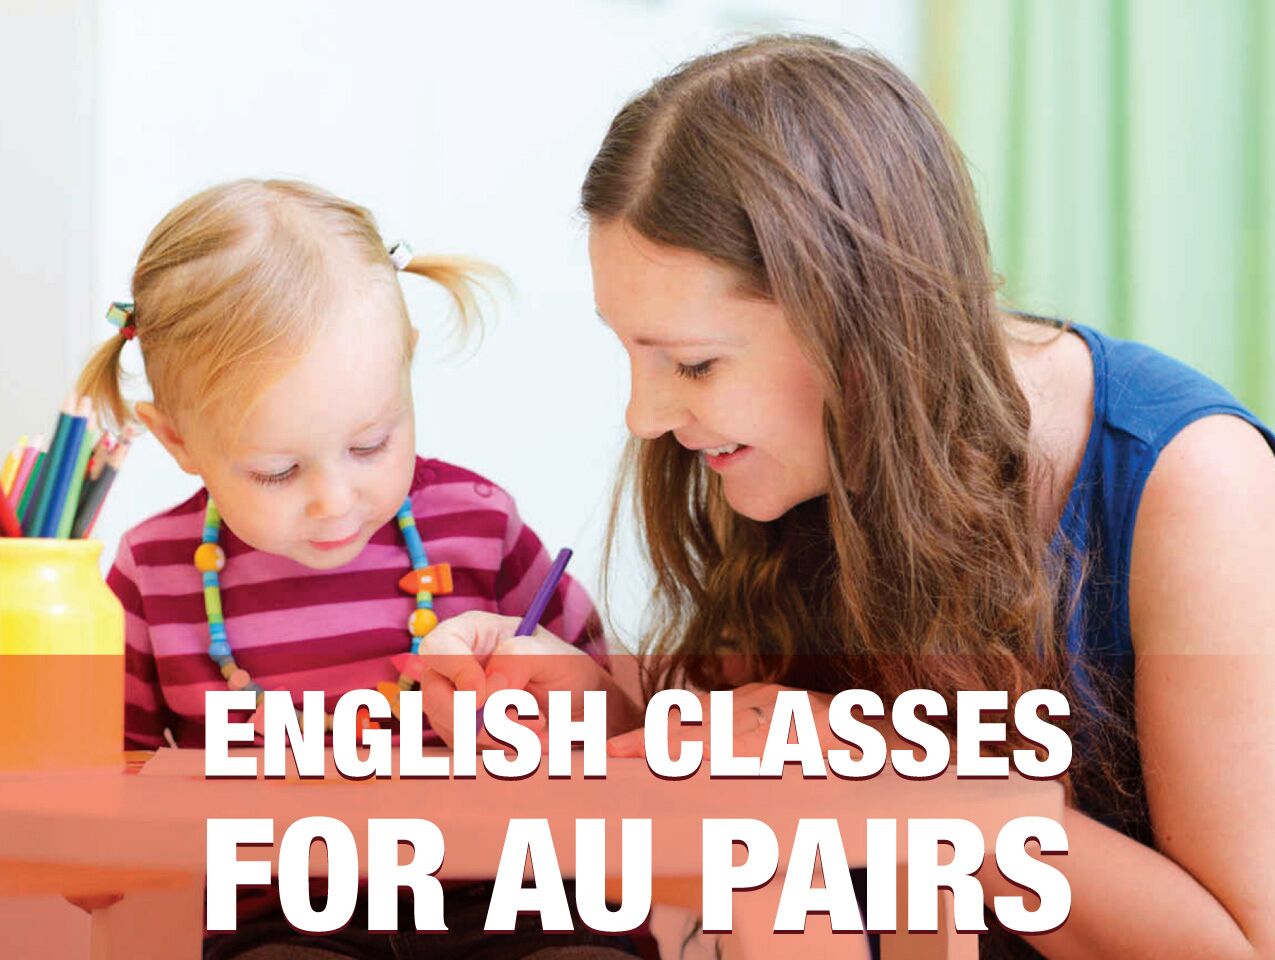 Au Pair Online Training - Teaching a Foreign Language